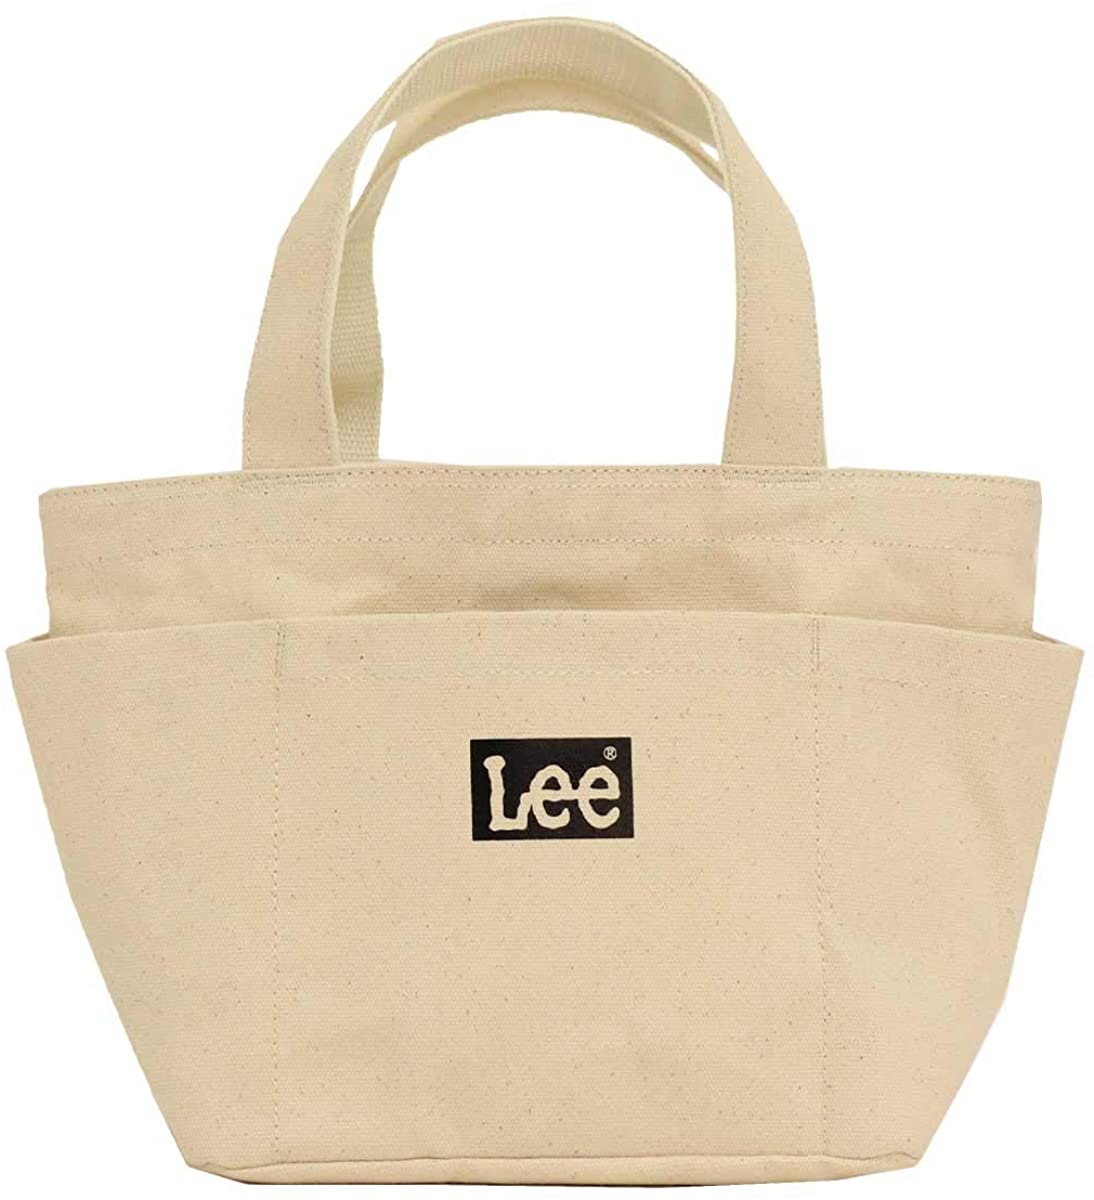 Lee(リー) ミニトートバッグの商品画像サムネ1 